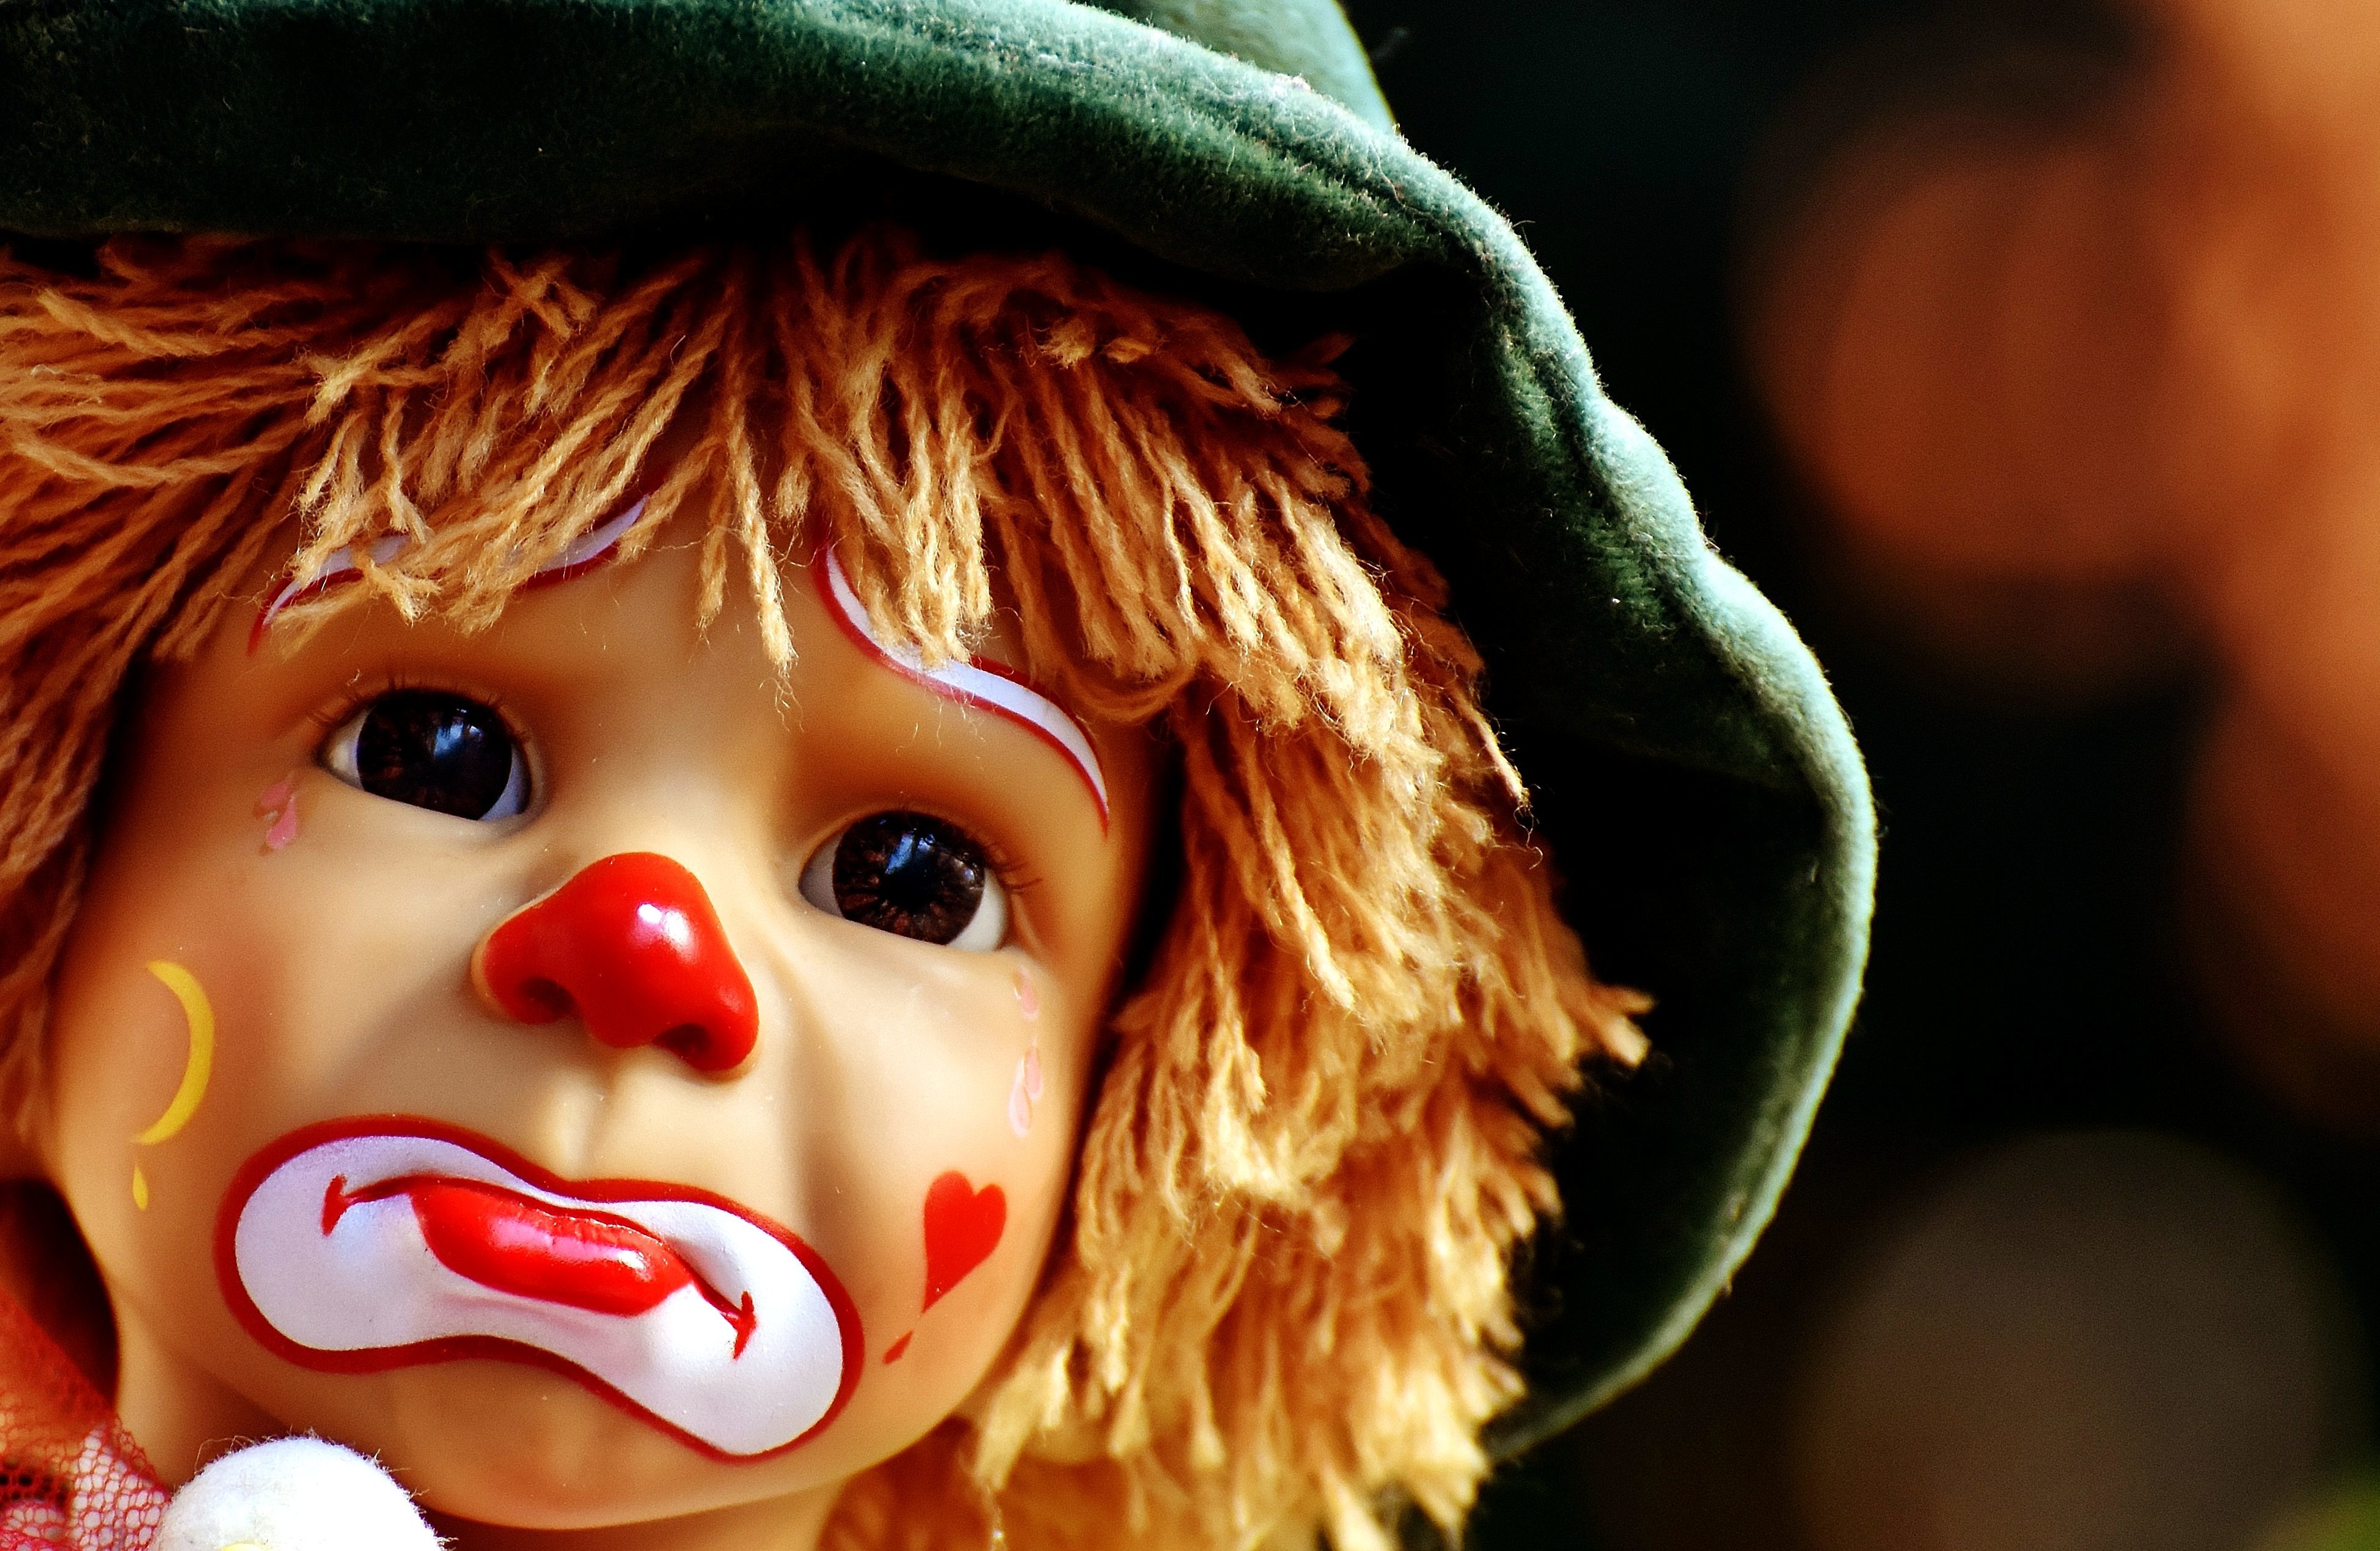 Free picture: sad clown, face, doll, toy, portrait